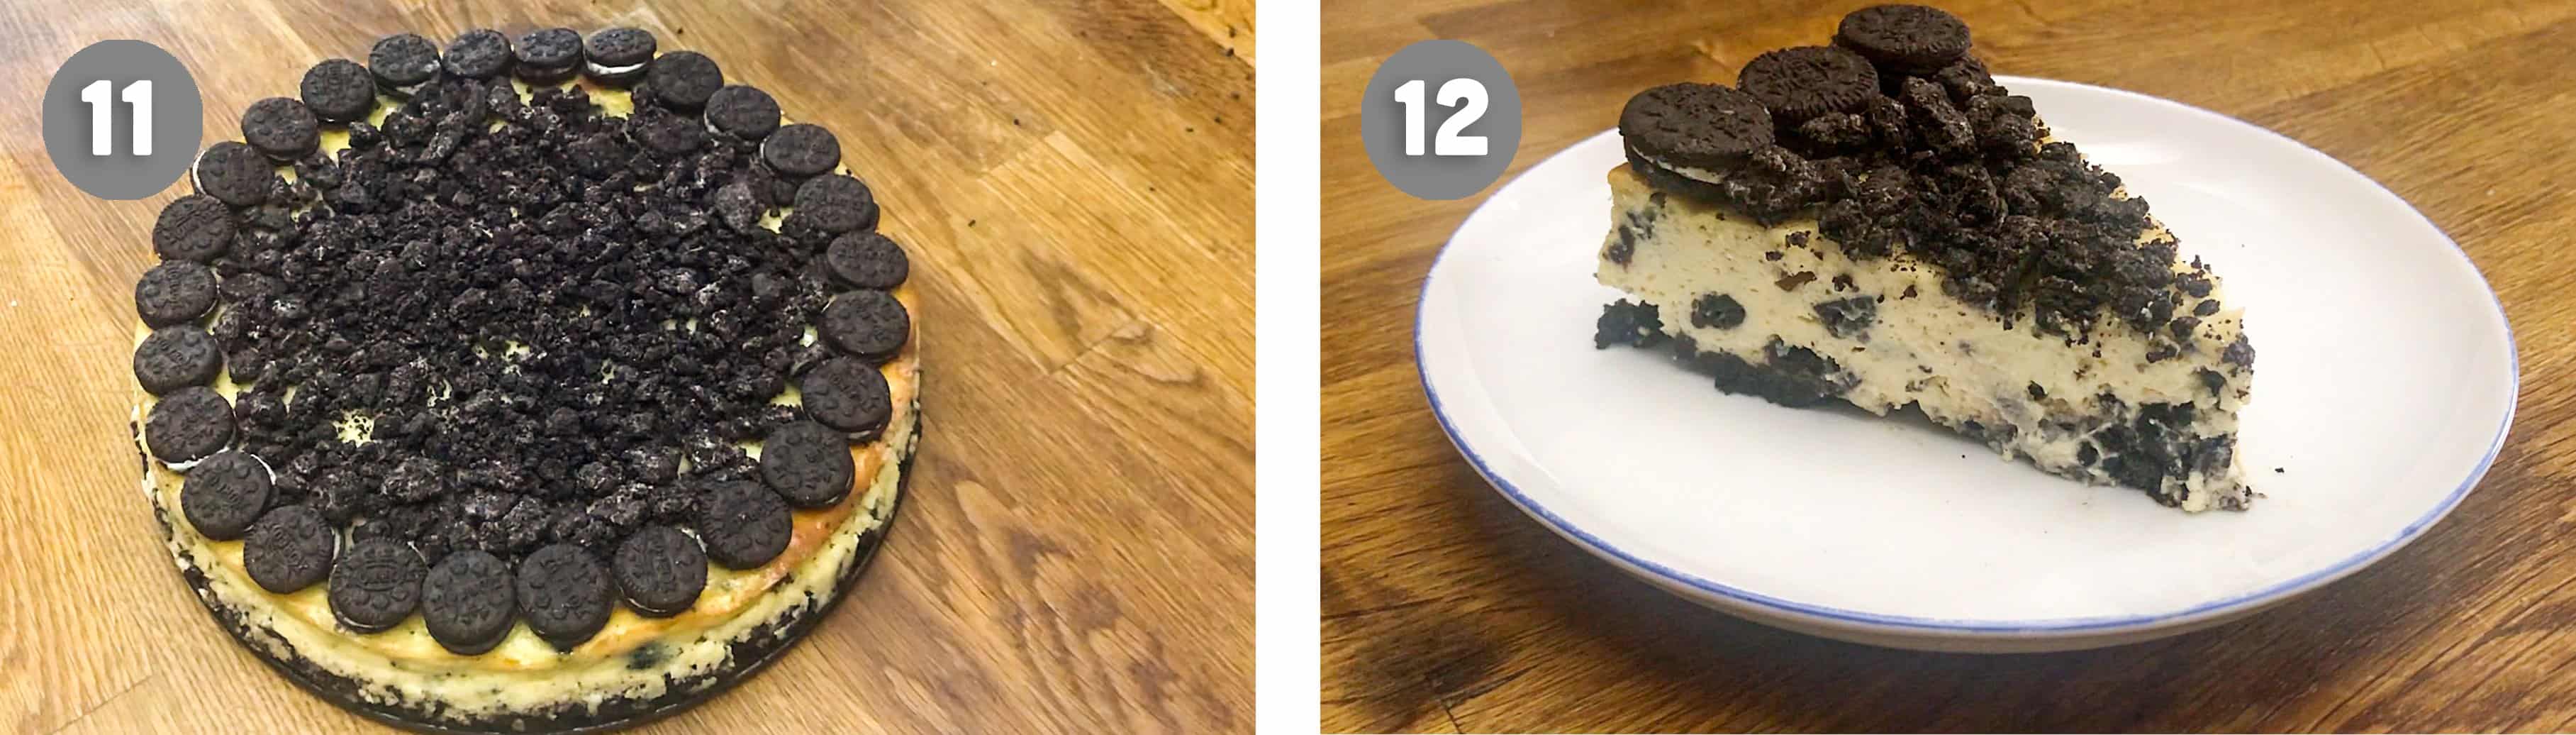 oreo cheesecake step by step 11-12